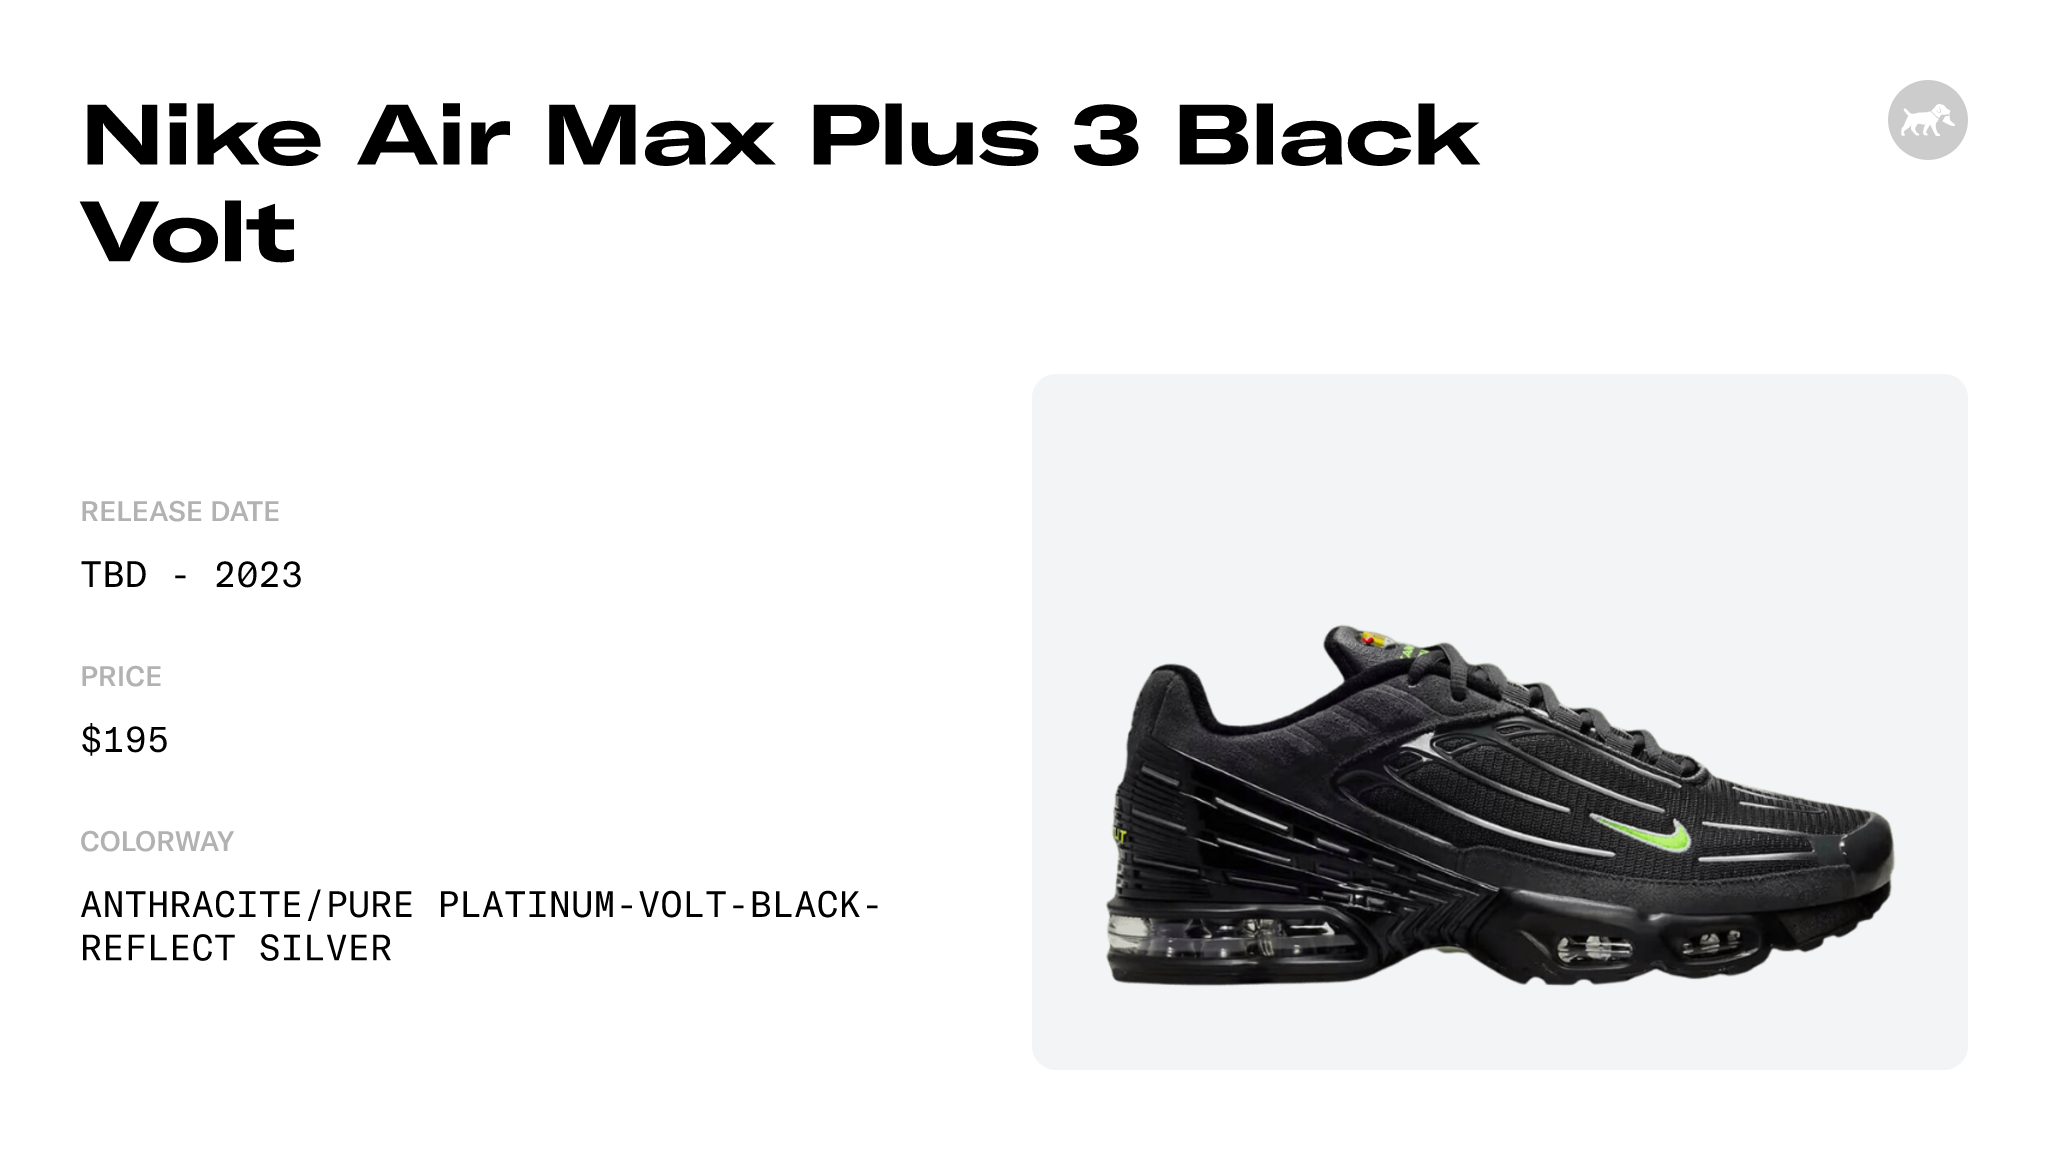 Nike Air Max Plus 3 Black Volt - FQ2387-001 Raffles and Release Date